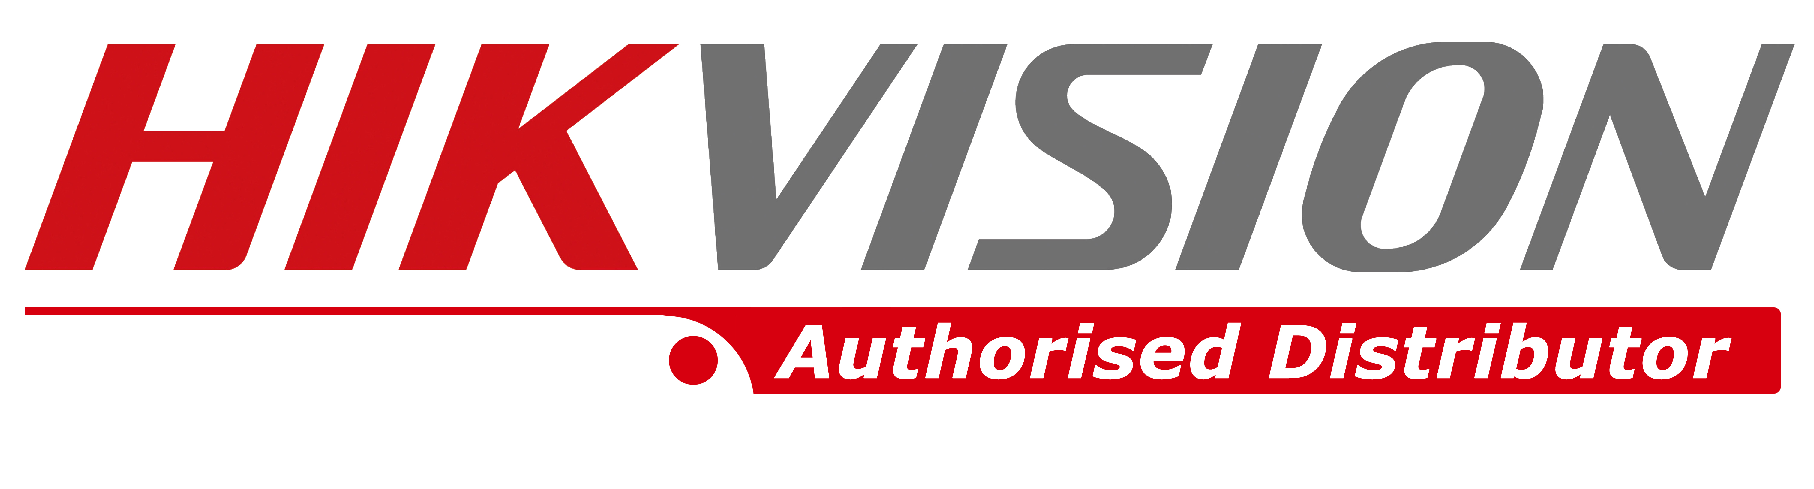 Hikvision Distributor In Singapore